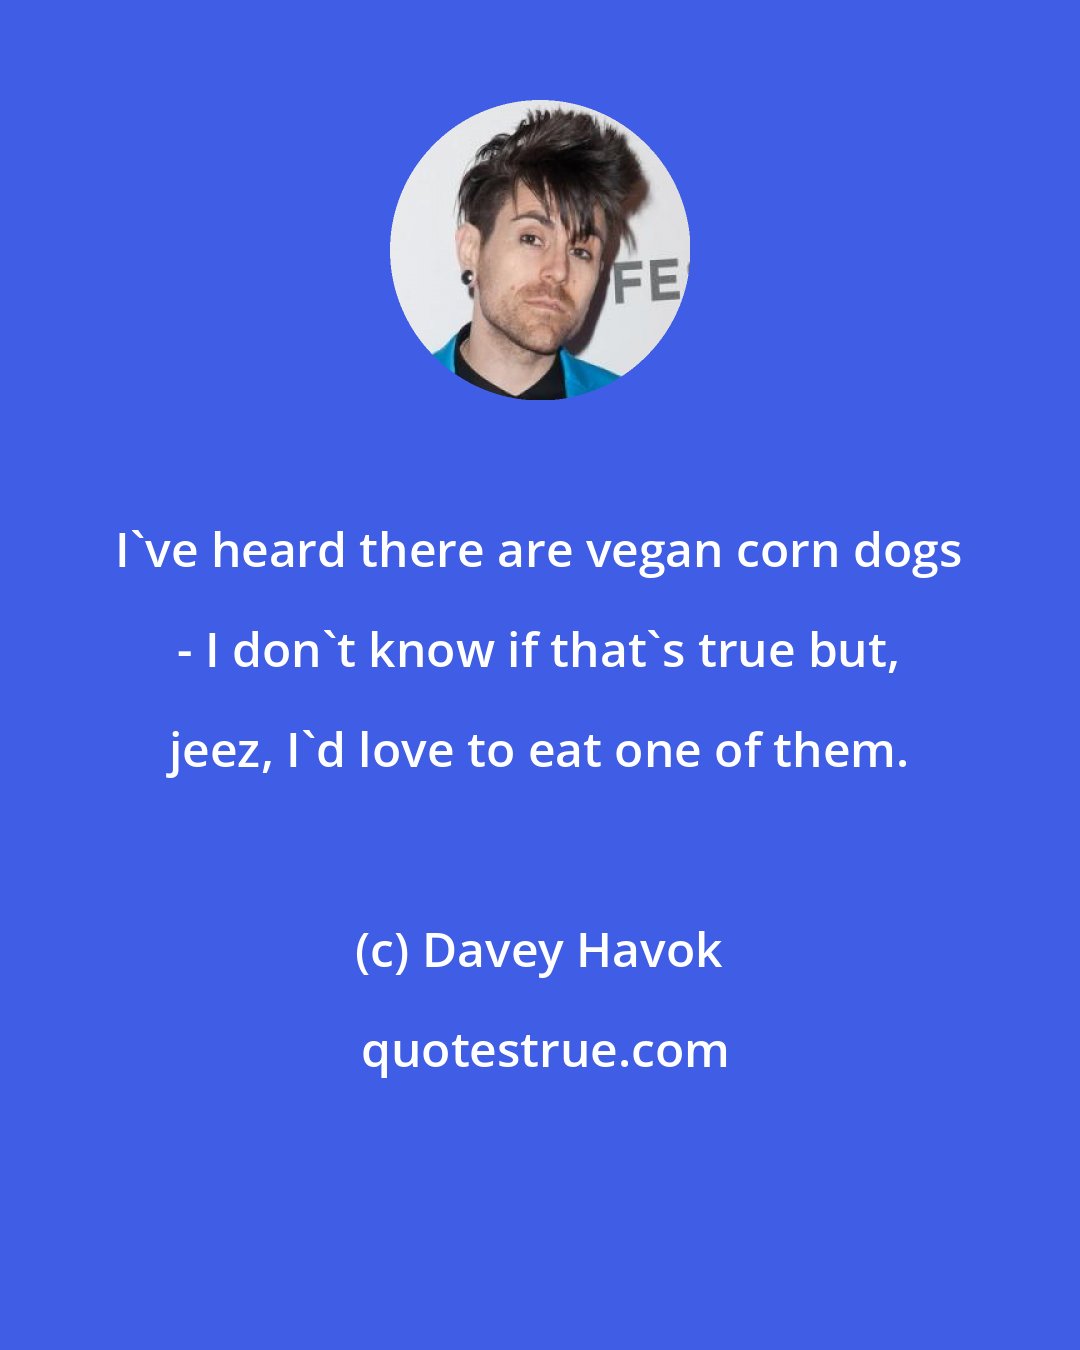 Davey Havok: I've heard there are vegan corn dogs - I don't know if that's true but, jeez, I'd love to eat one of them.